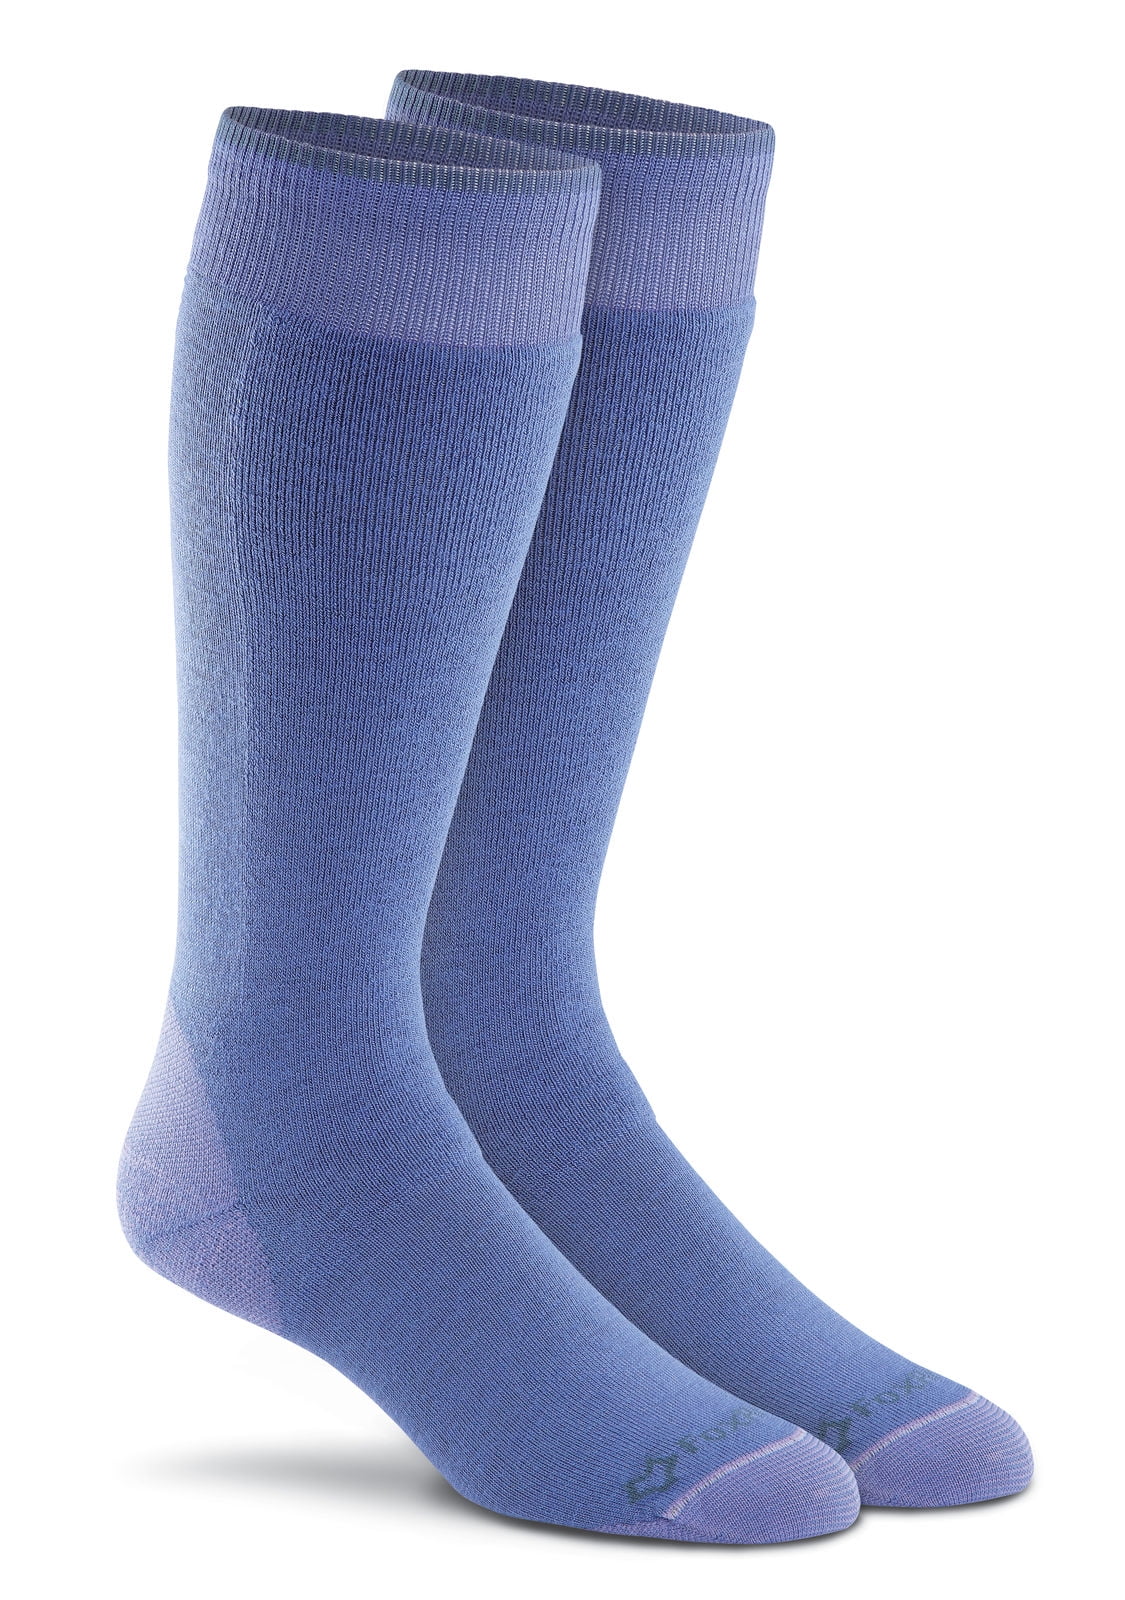 Flat Toe Seams Tailored For Children Thermolite Warmth-4212J Eurosocks Junior Ski Supreme Socks Padded 